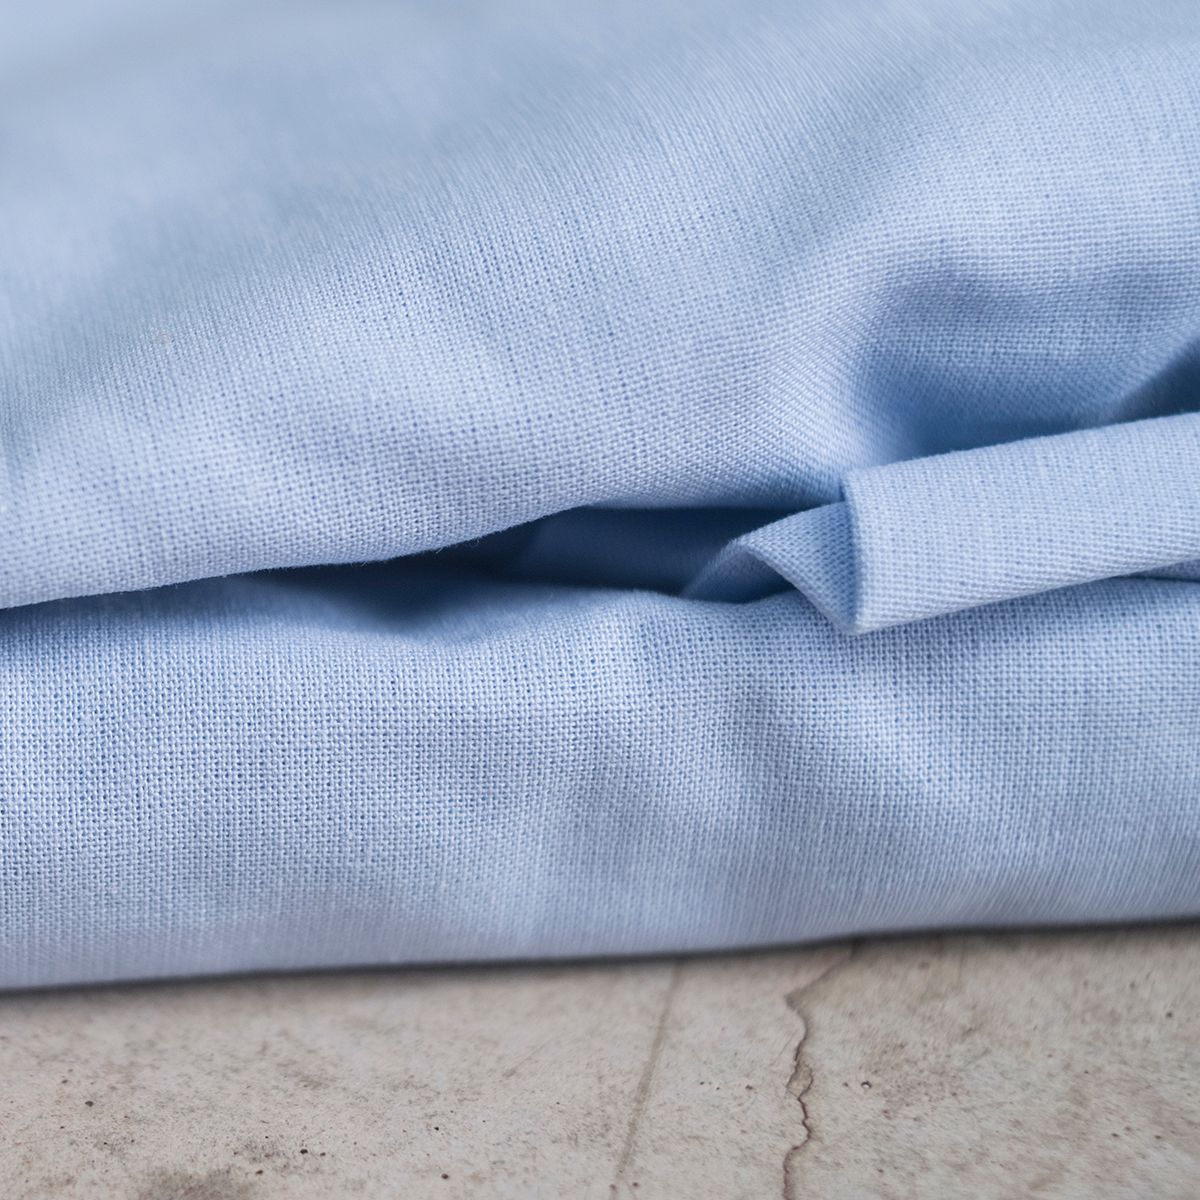  [ORDER] COTONEA Drap cotton bọc nệm dệt kiểu linen Ice blue 